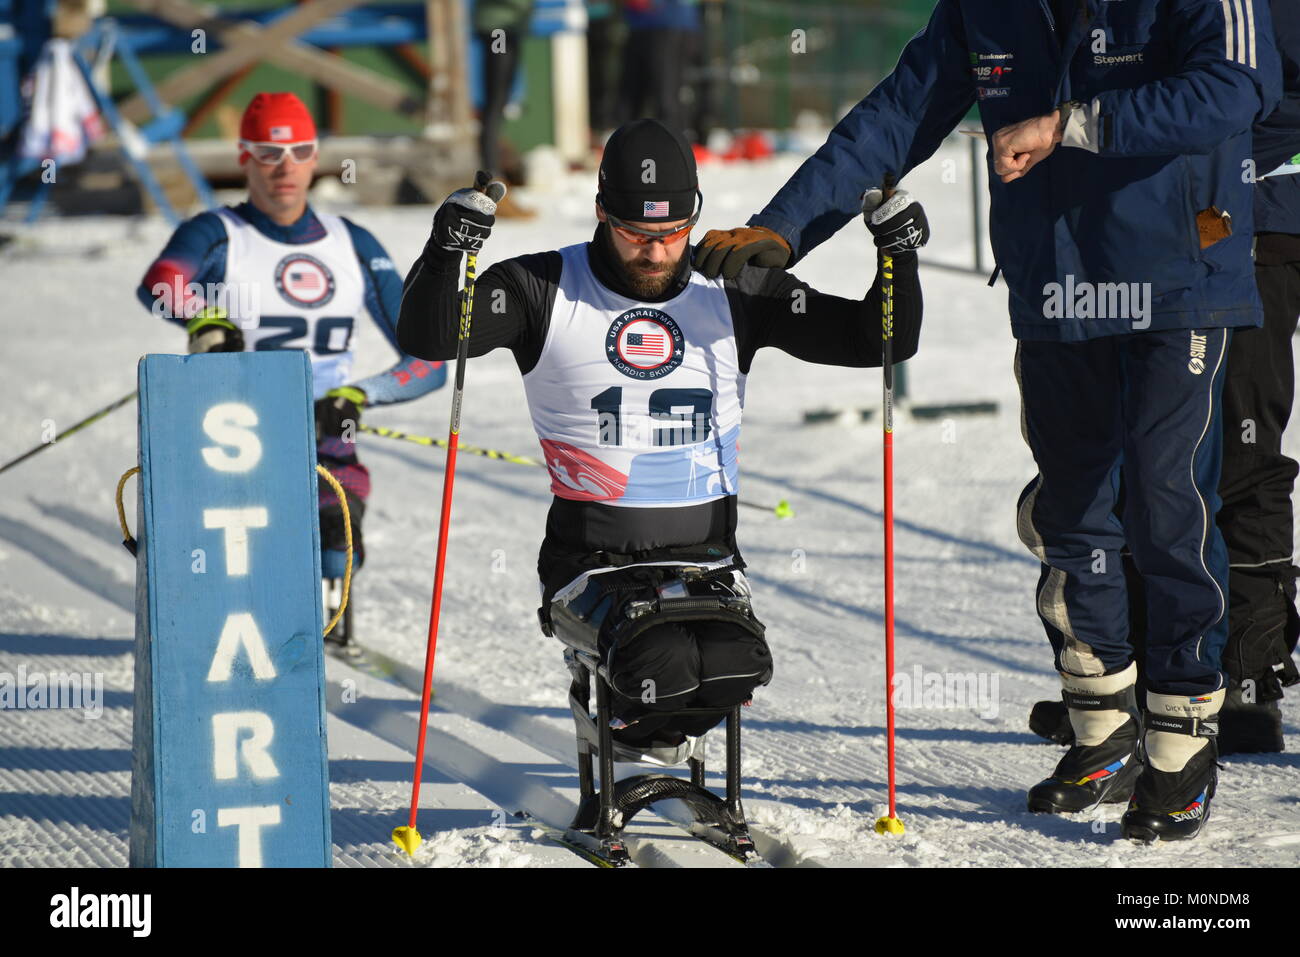 Il Paralympic cross country ski racer Aaron Pike a partire gara a 2016 U.S. Paralimpiadi Sit gare di sci, Craftsbury Outdoor Center, Craftsbury, VT, Stati Uniti d'America. Foto Stock